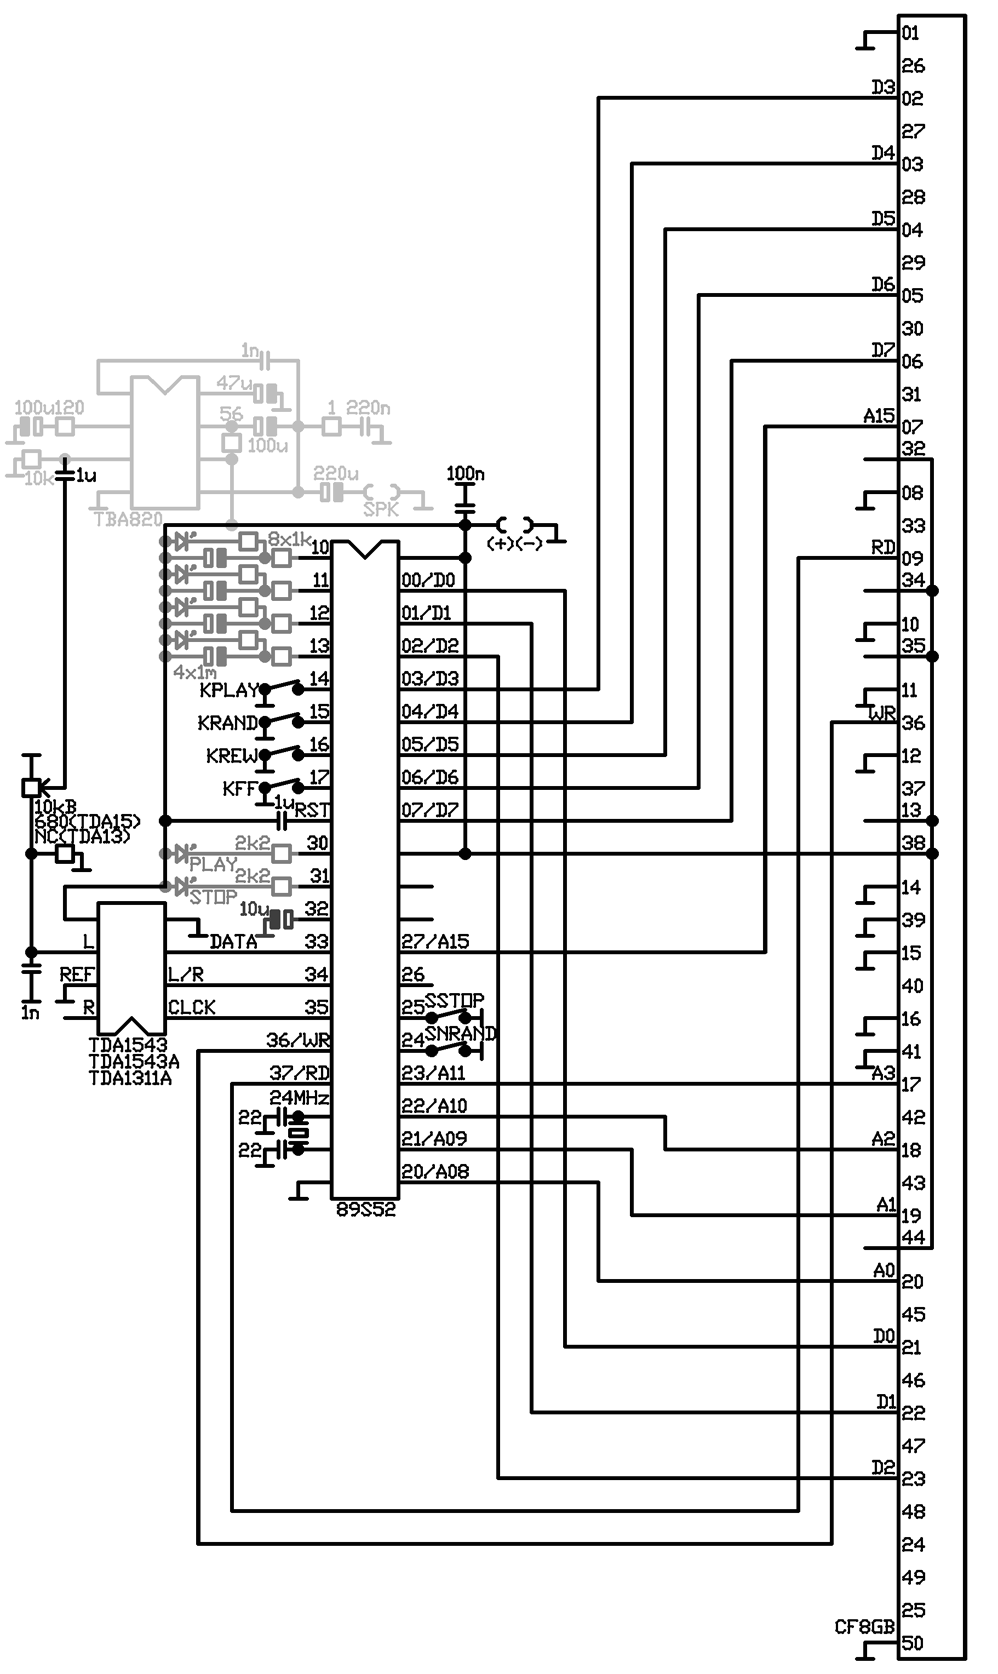 circuit-schematic-at89s52-wav-reader-8gb-flash-memory